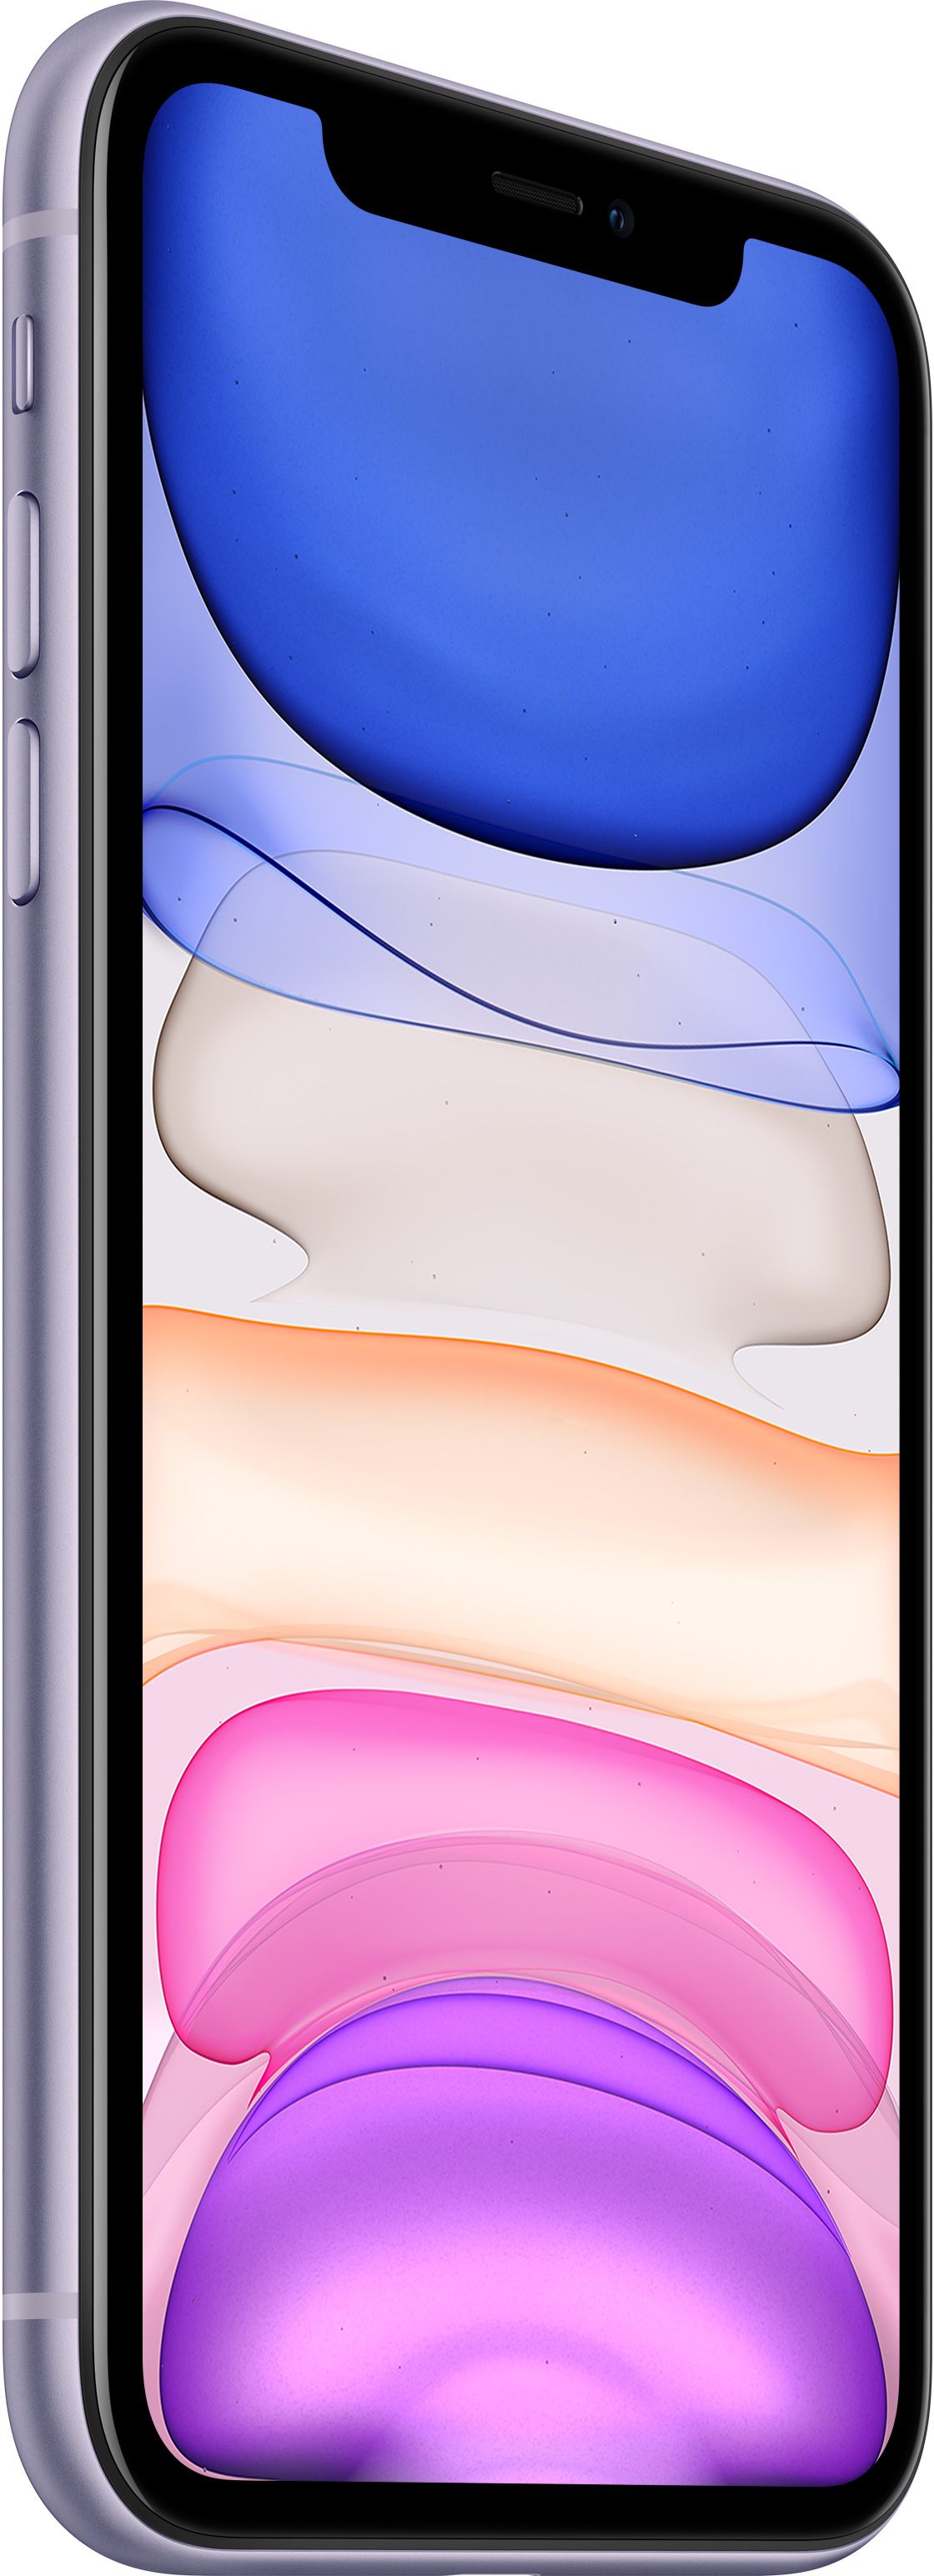 Apple iPhone 11 256GB purple